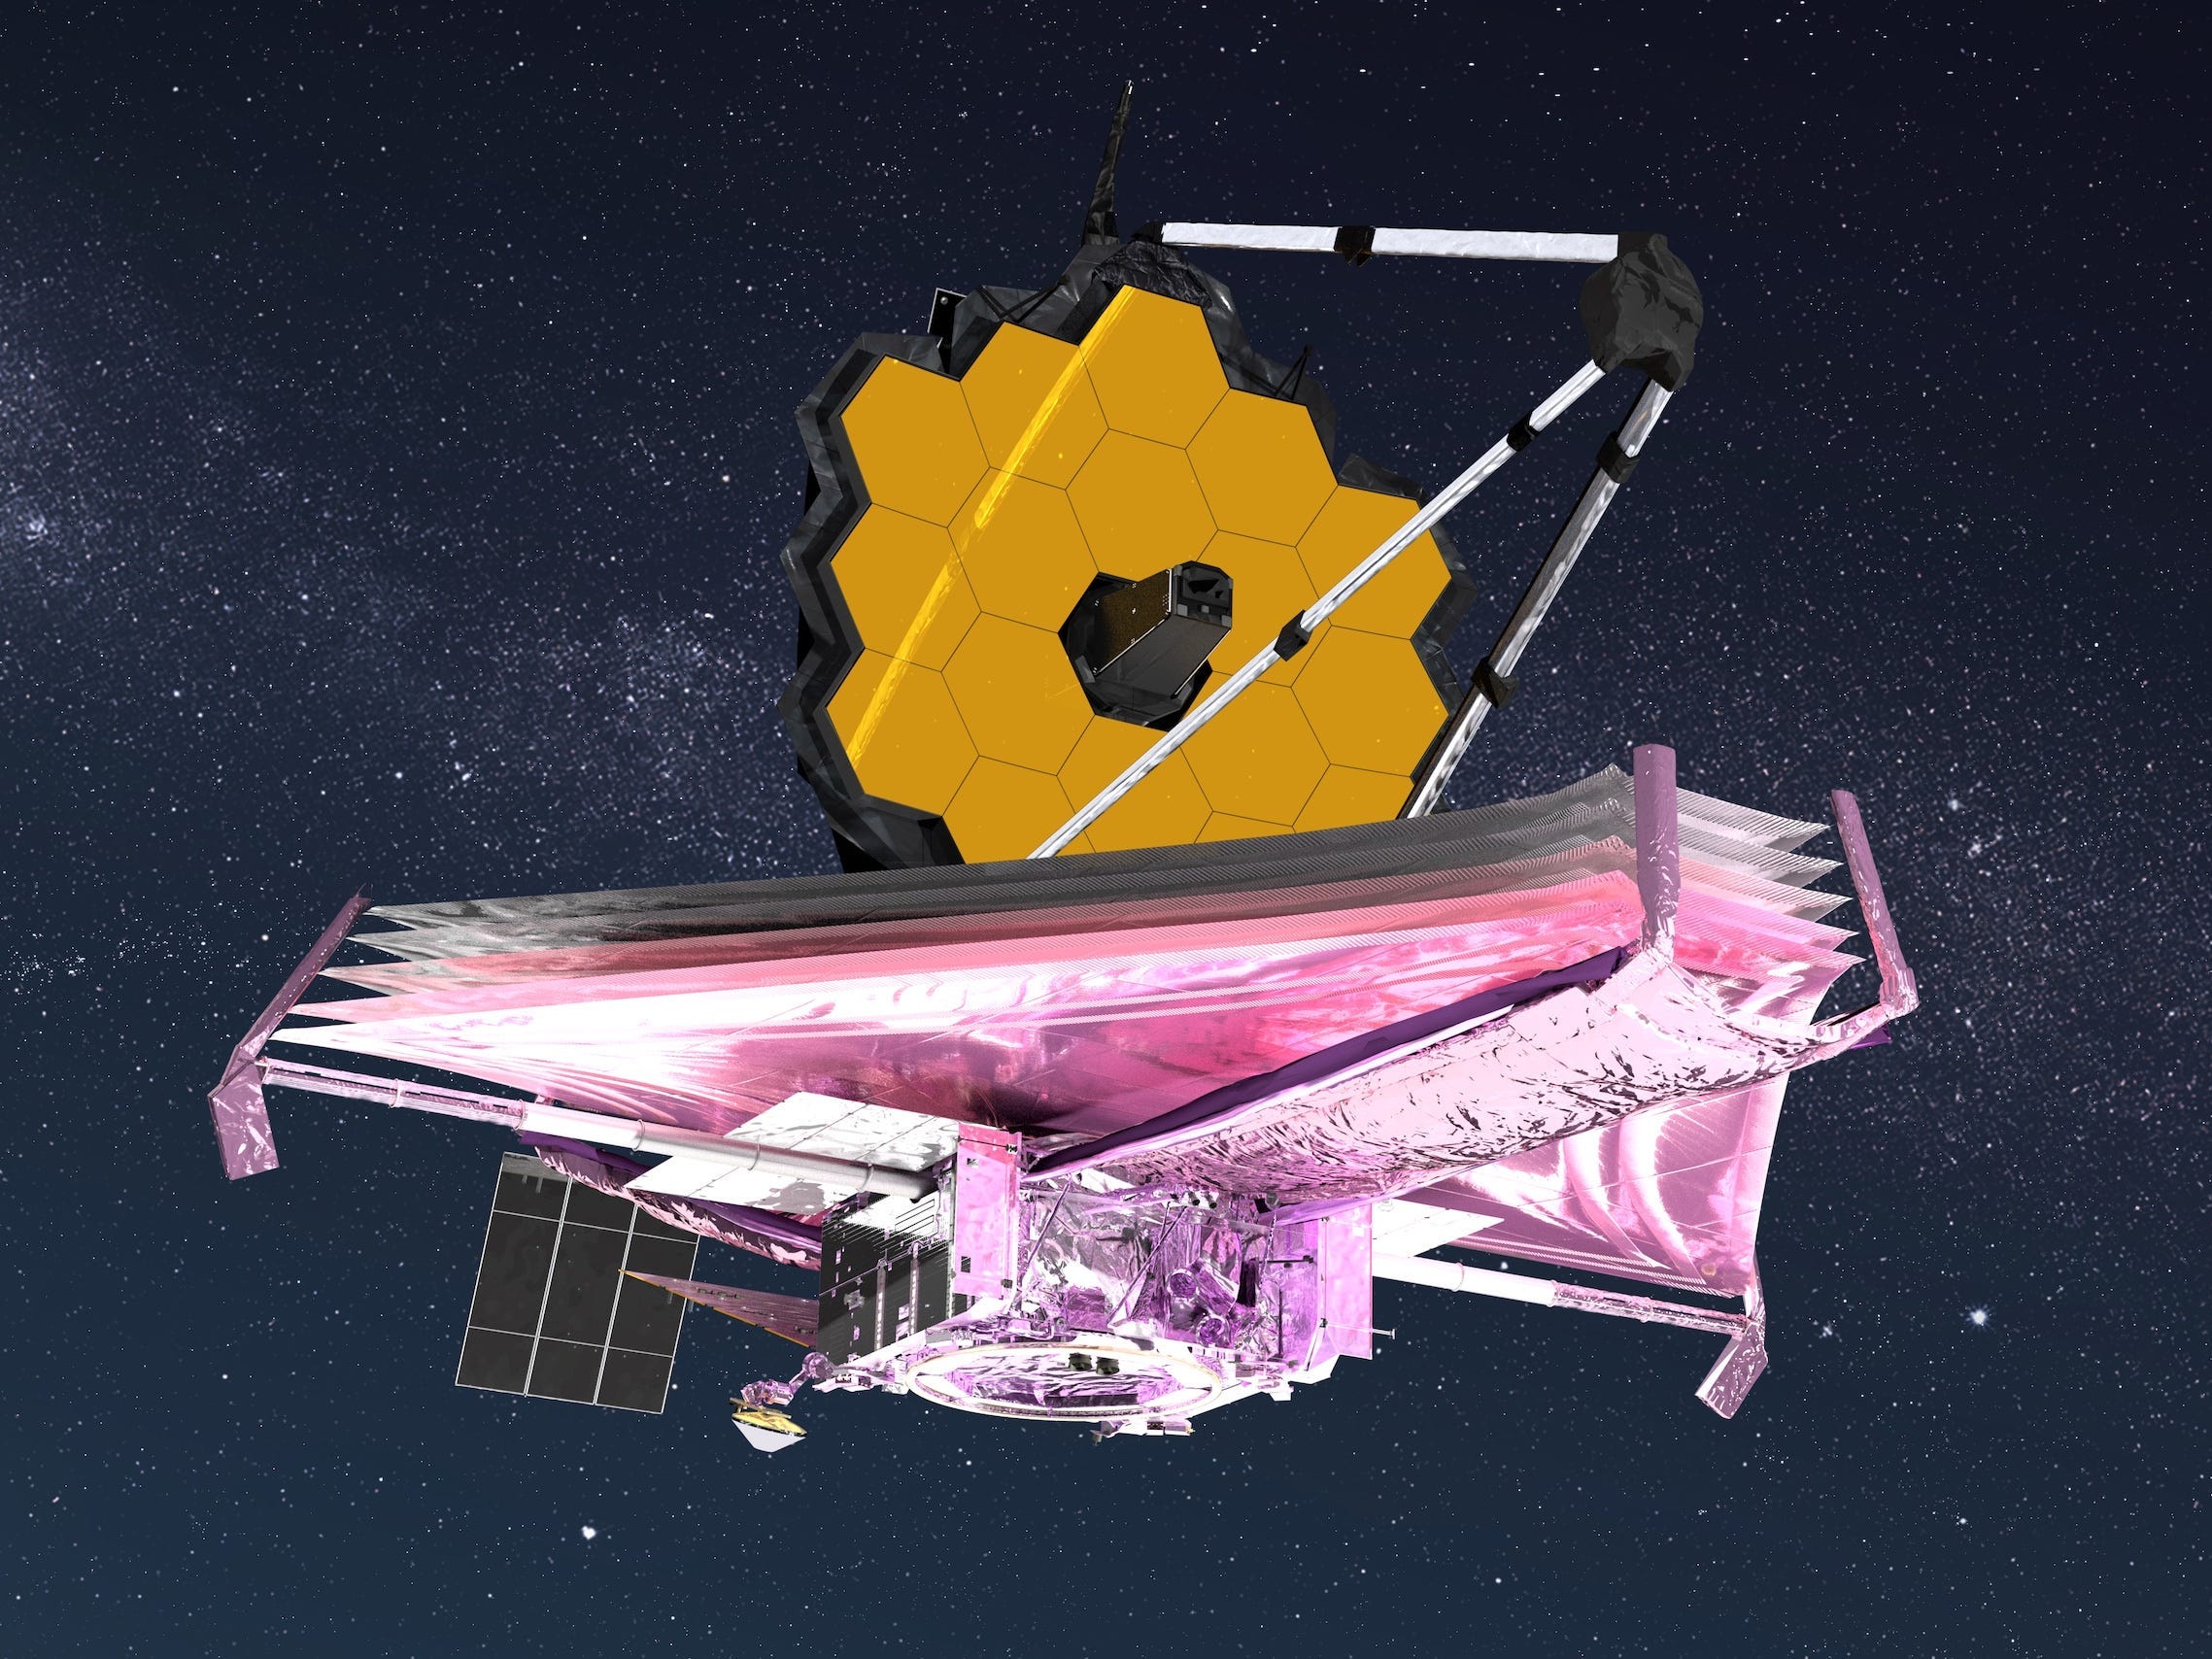 james webb space telescope artist illustration gold panels octagon on purple foil platform